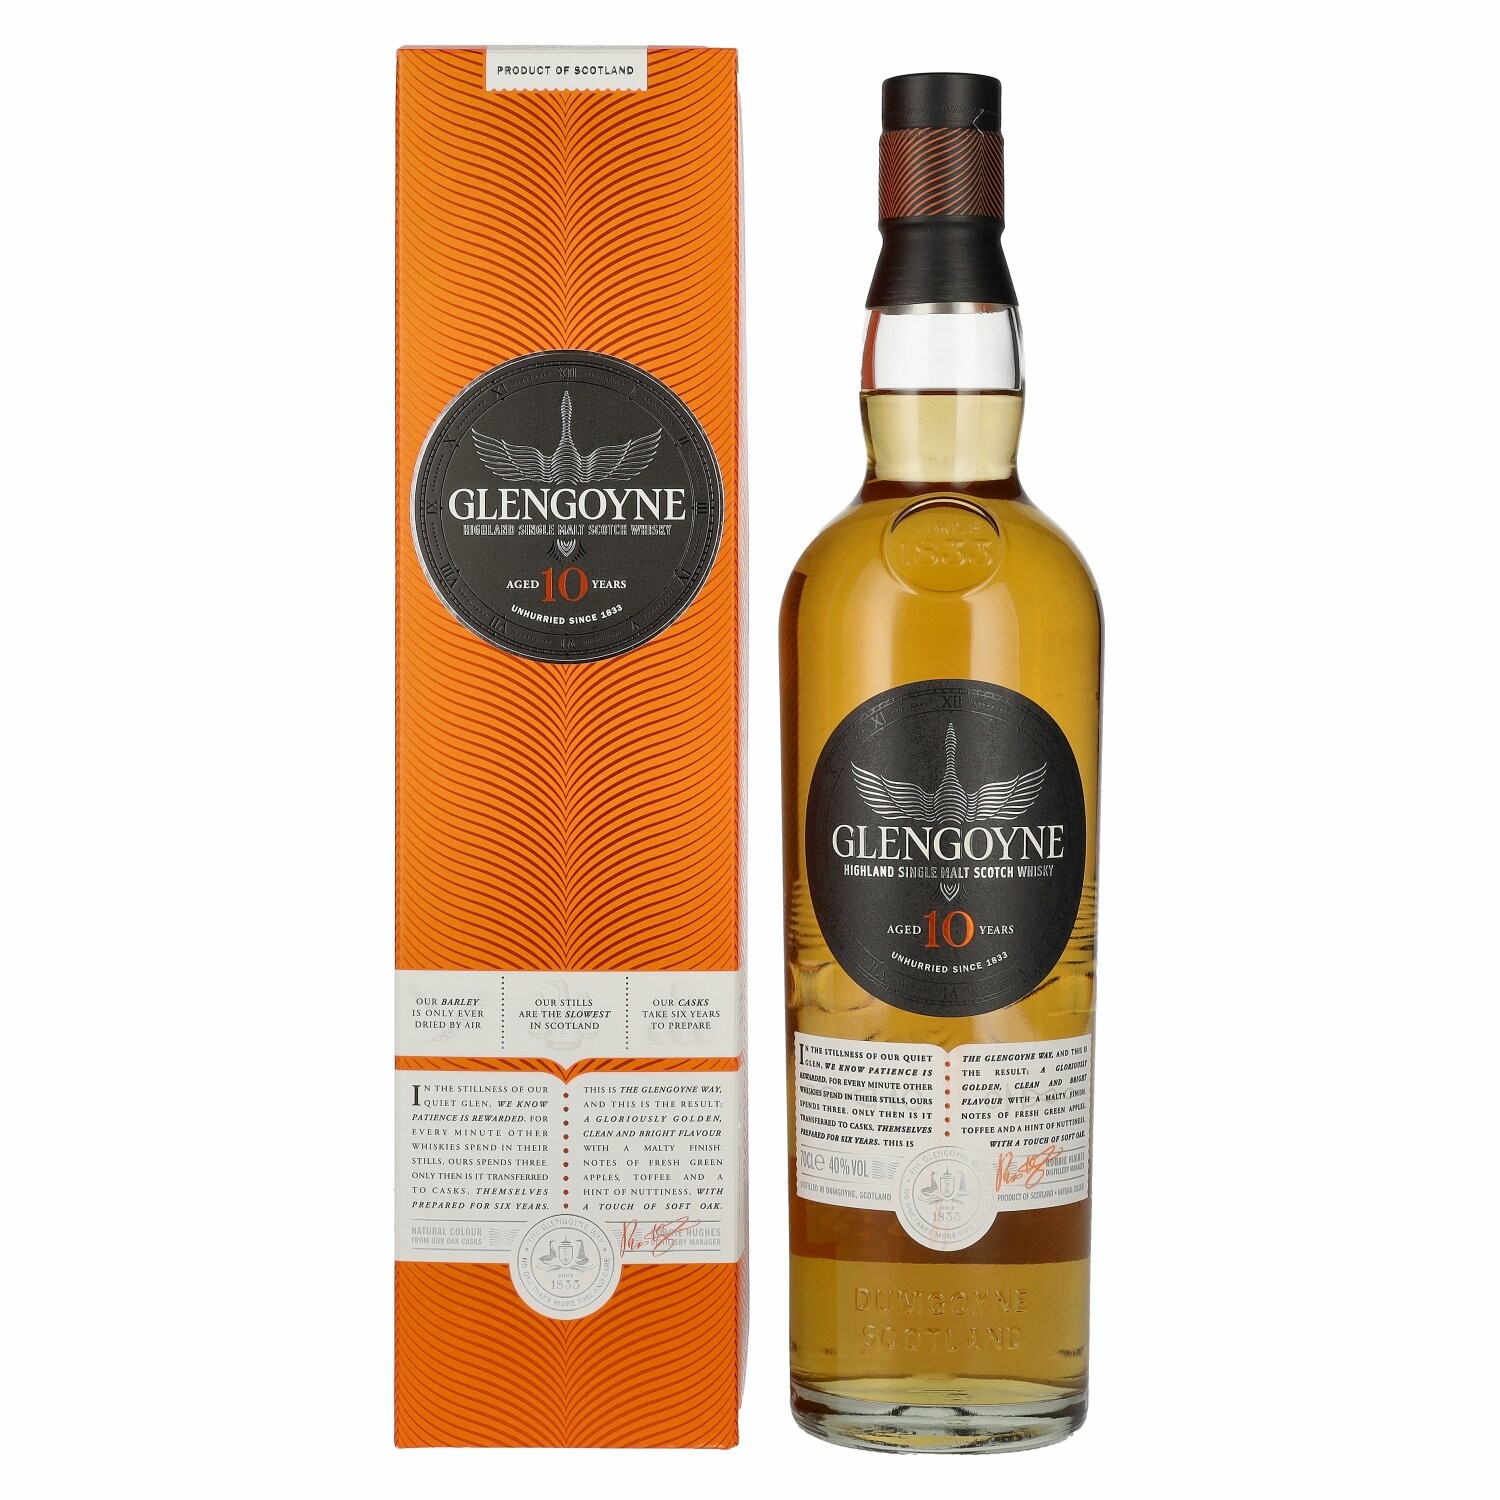 Glengoyne 10 Years Old Highland Single Malt Scotch Whisky 40% Vol. 0,7l in Giftbox